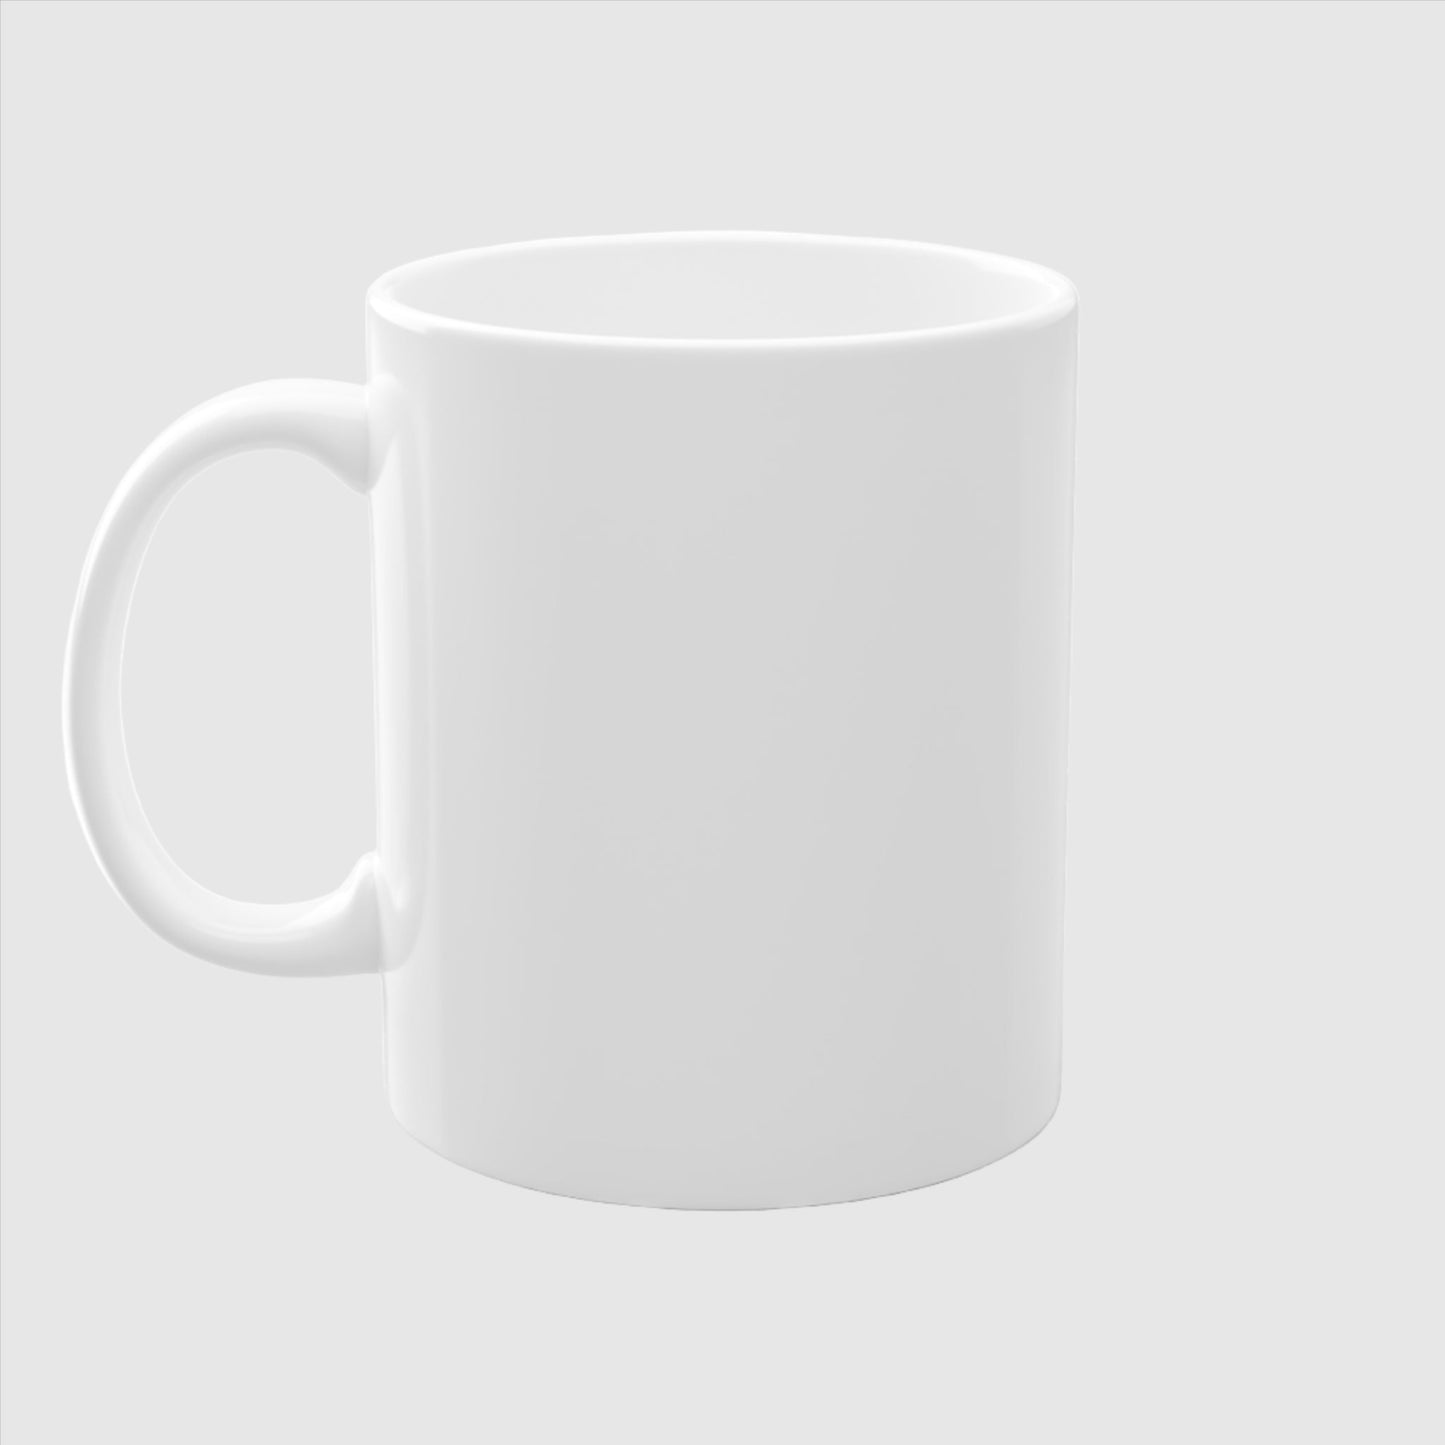 Personalized Letter Standard Mug, 11oz